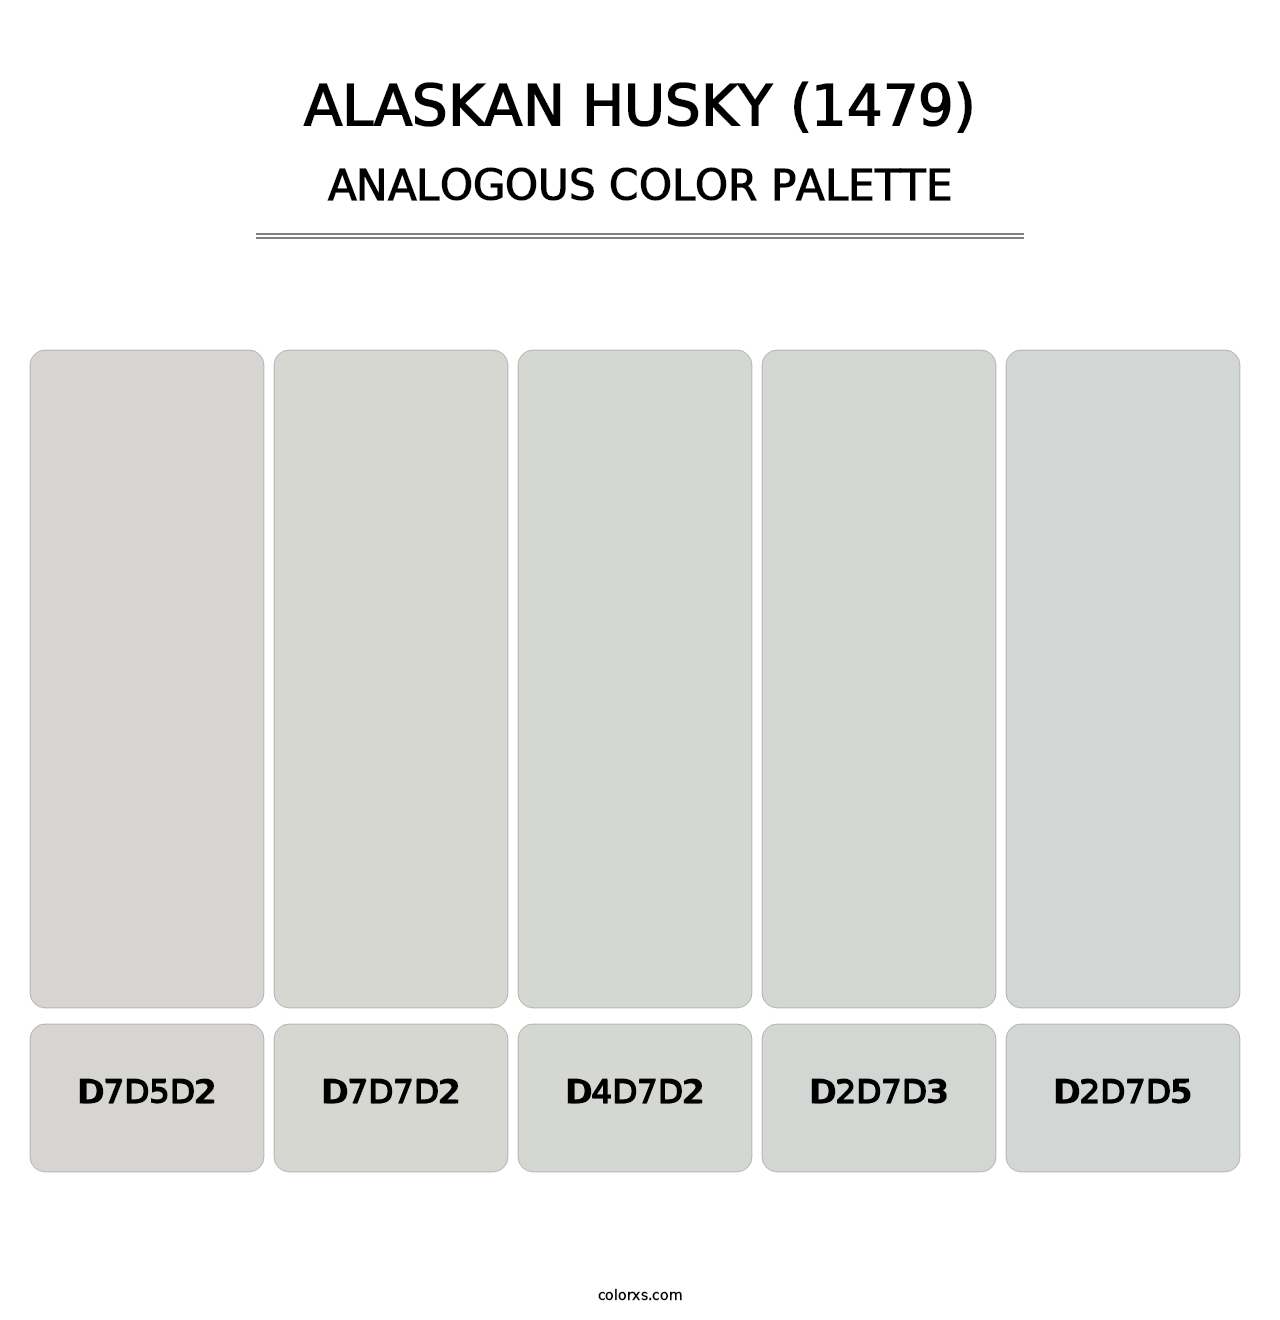 Alaskan Husky (1479) - Analogous Color Palette